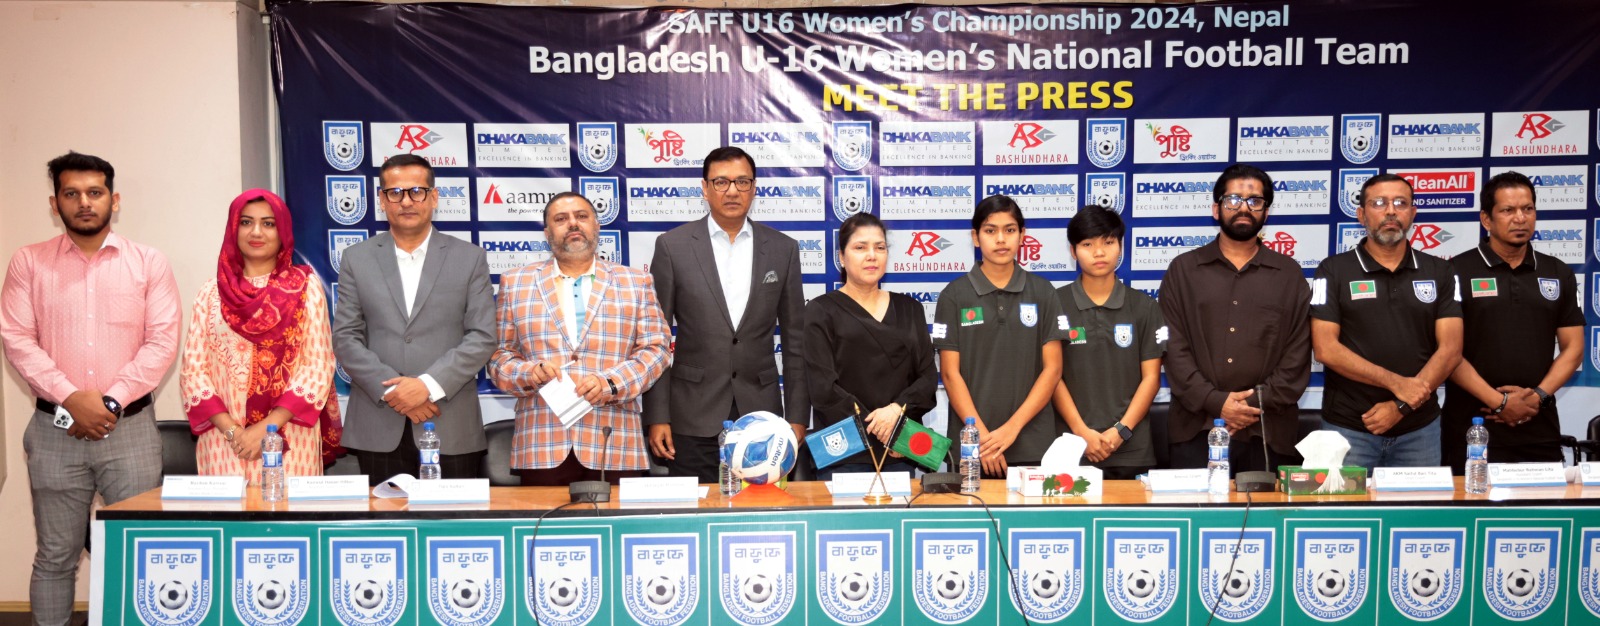 Bangladesh football team off to Nepal Wednesday for SAFF U-16 Women's Championship